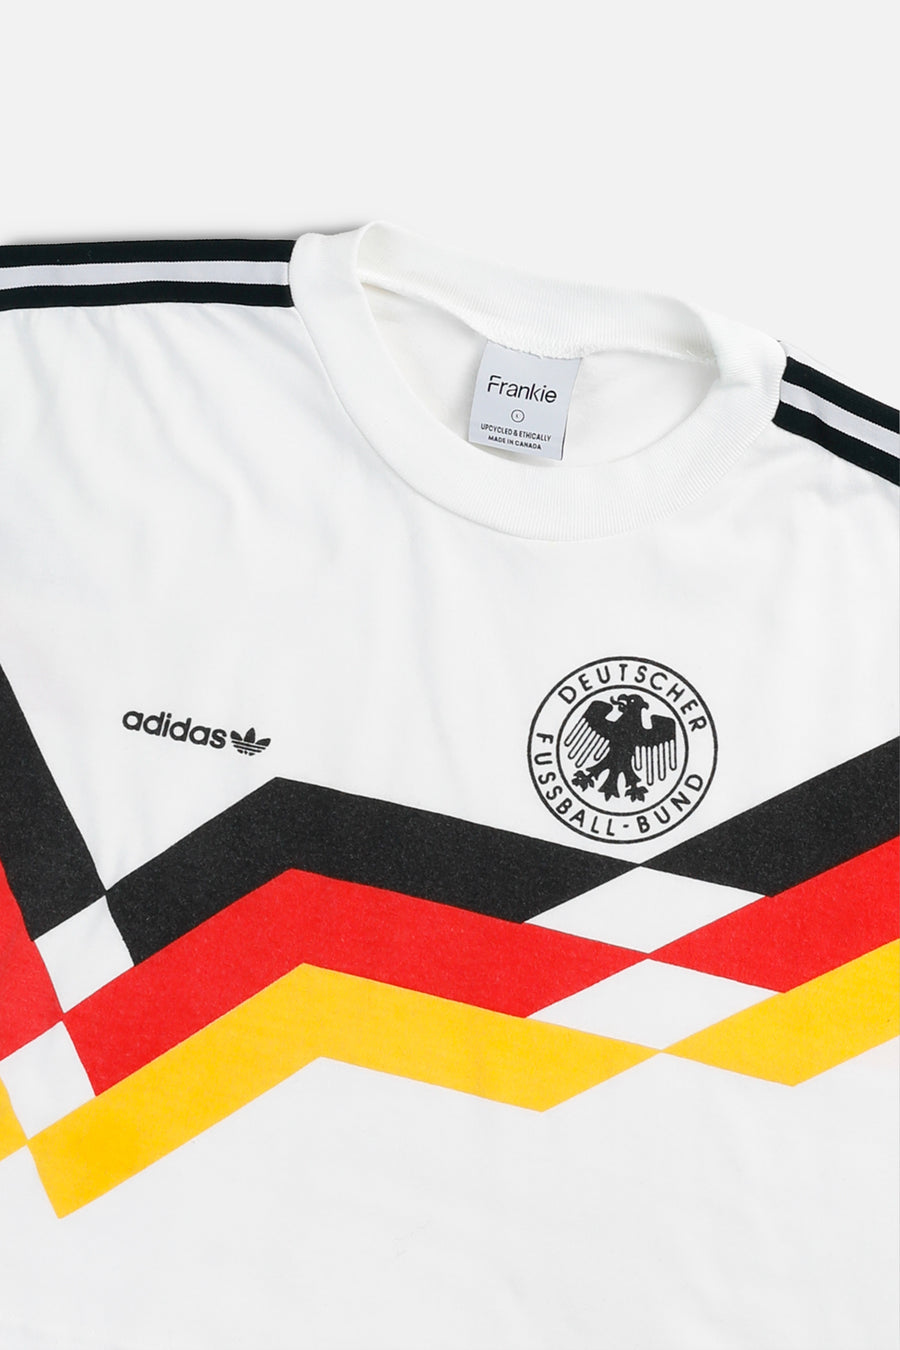 Rework Crop Germany Soccer Jersey - L